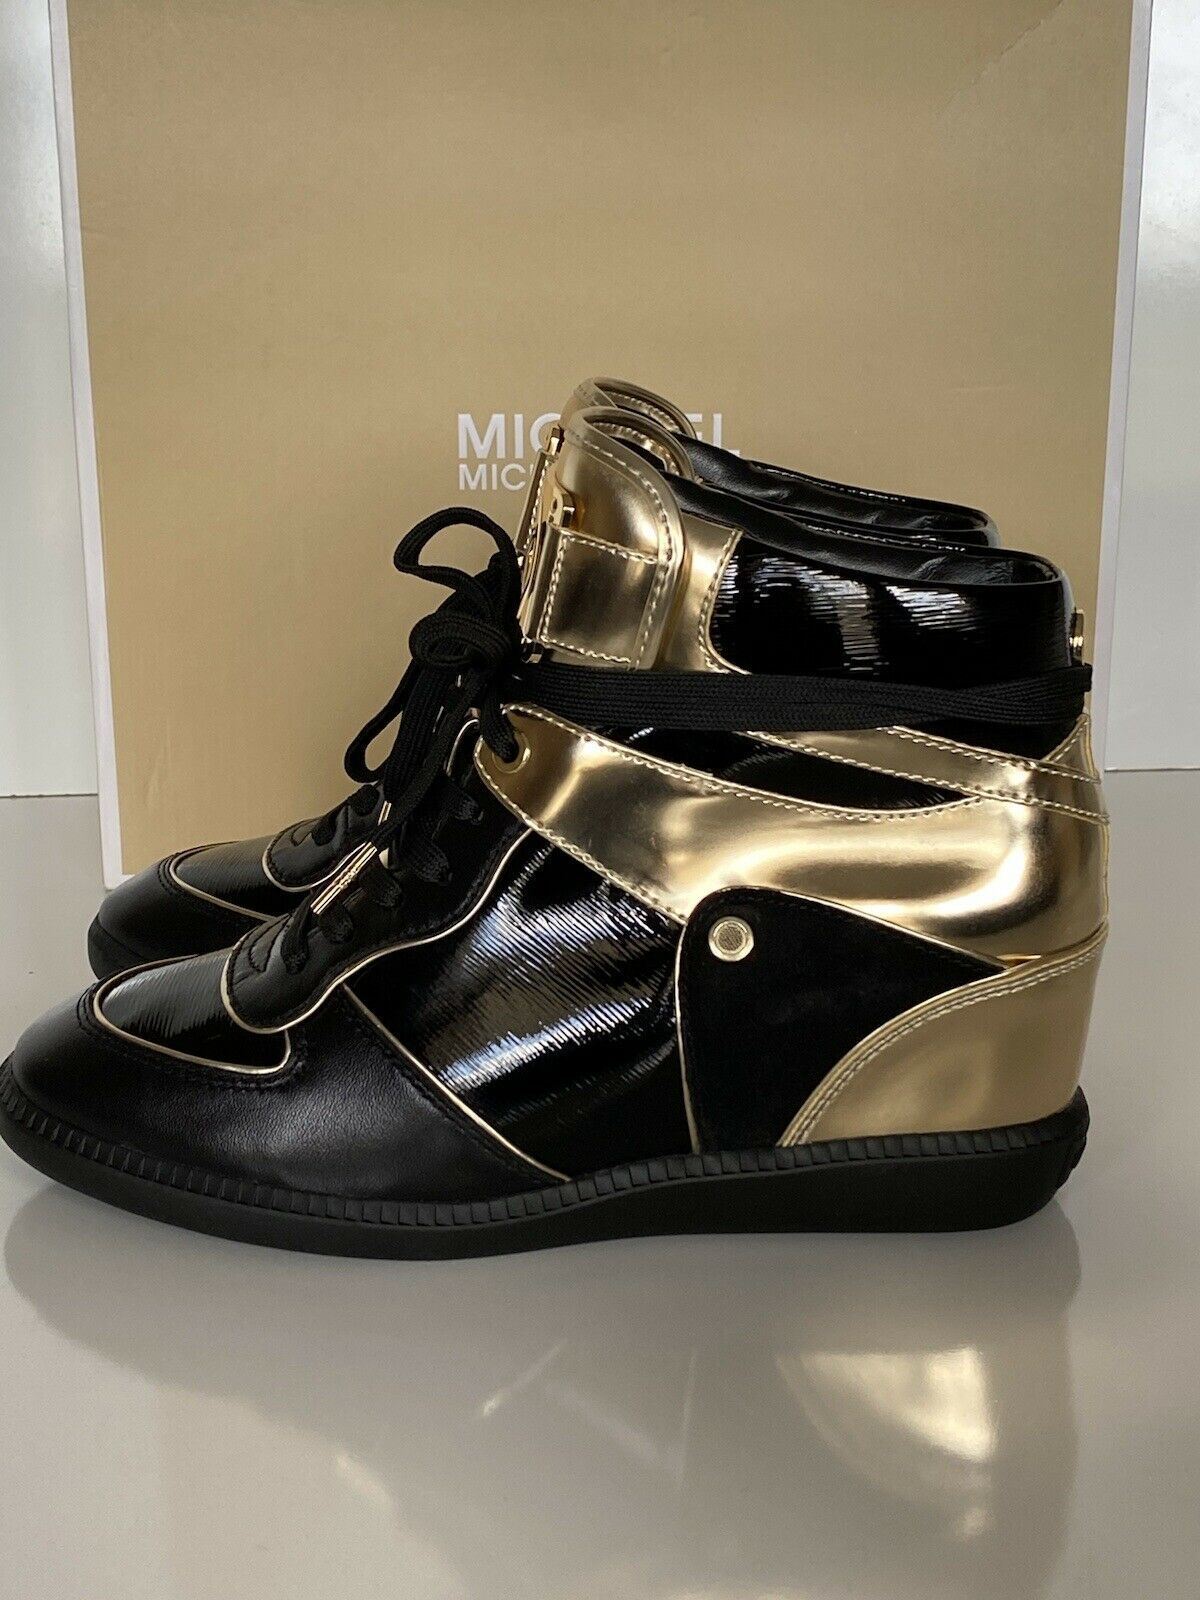 NWB Michael Kors Nikko High Top Sneakers Black Gold Size 8 US